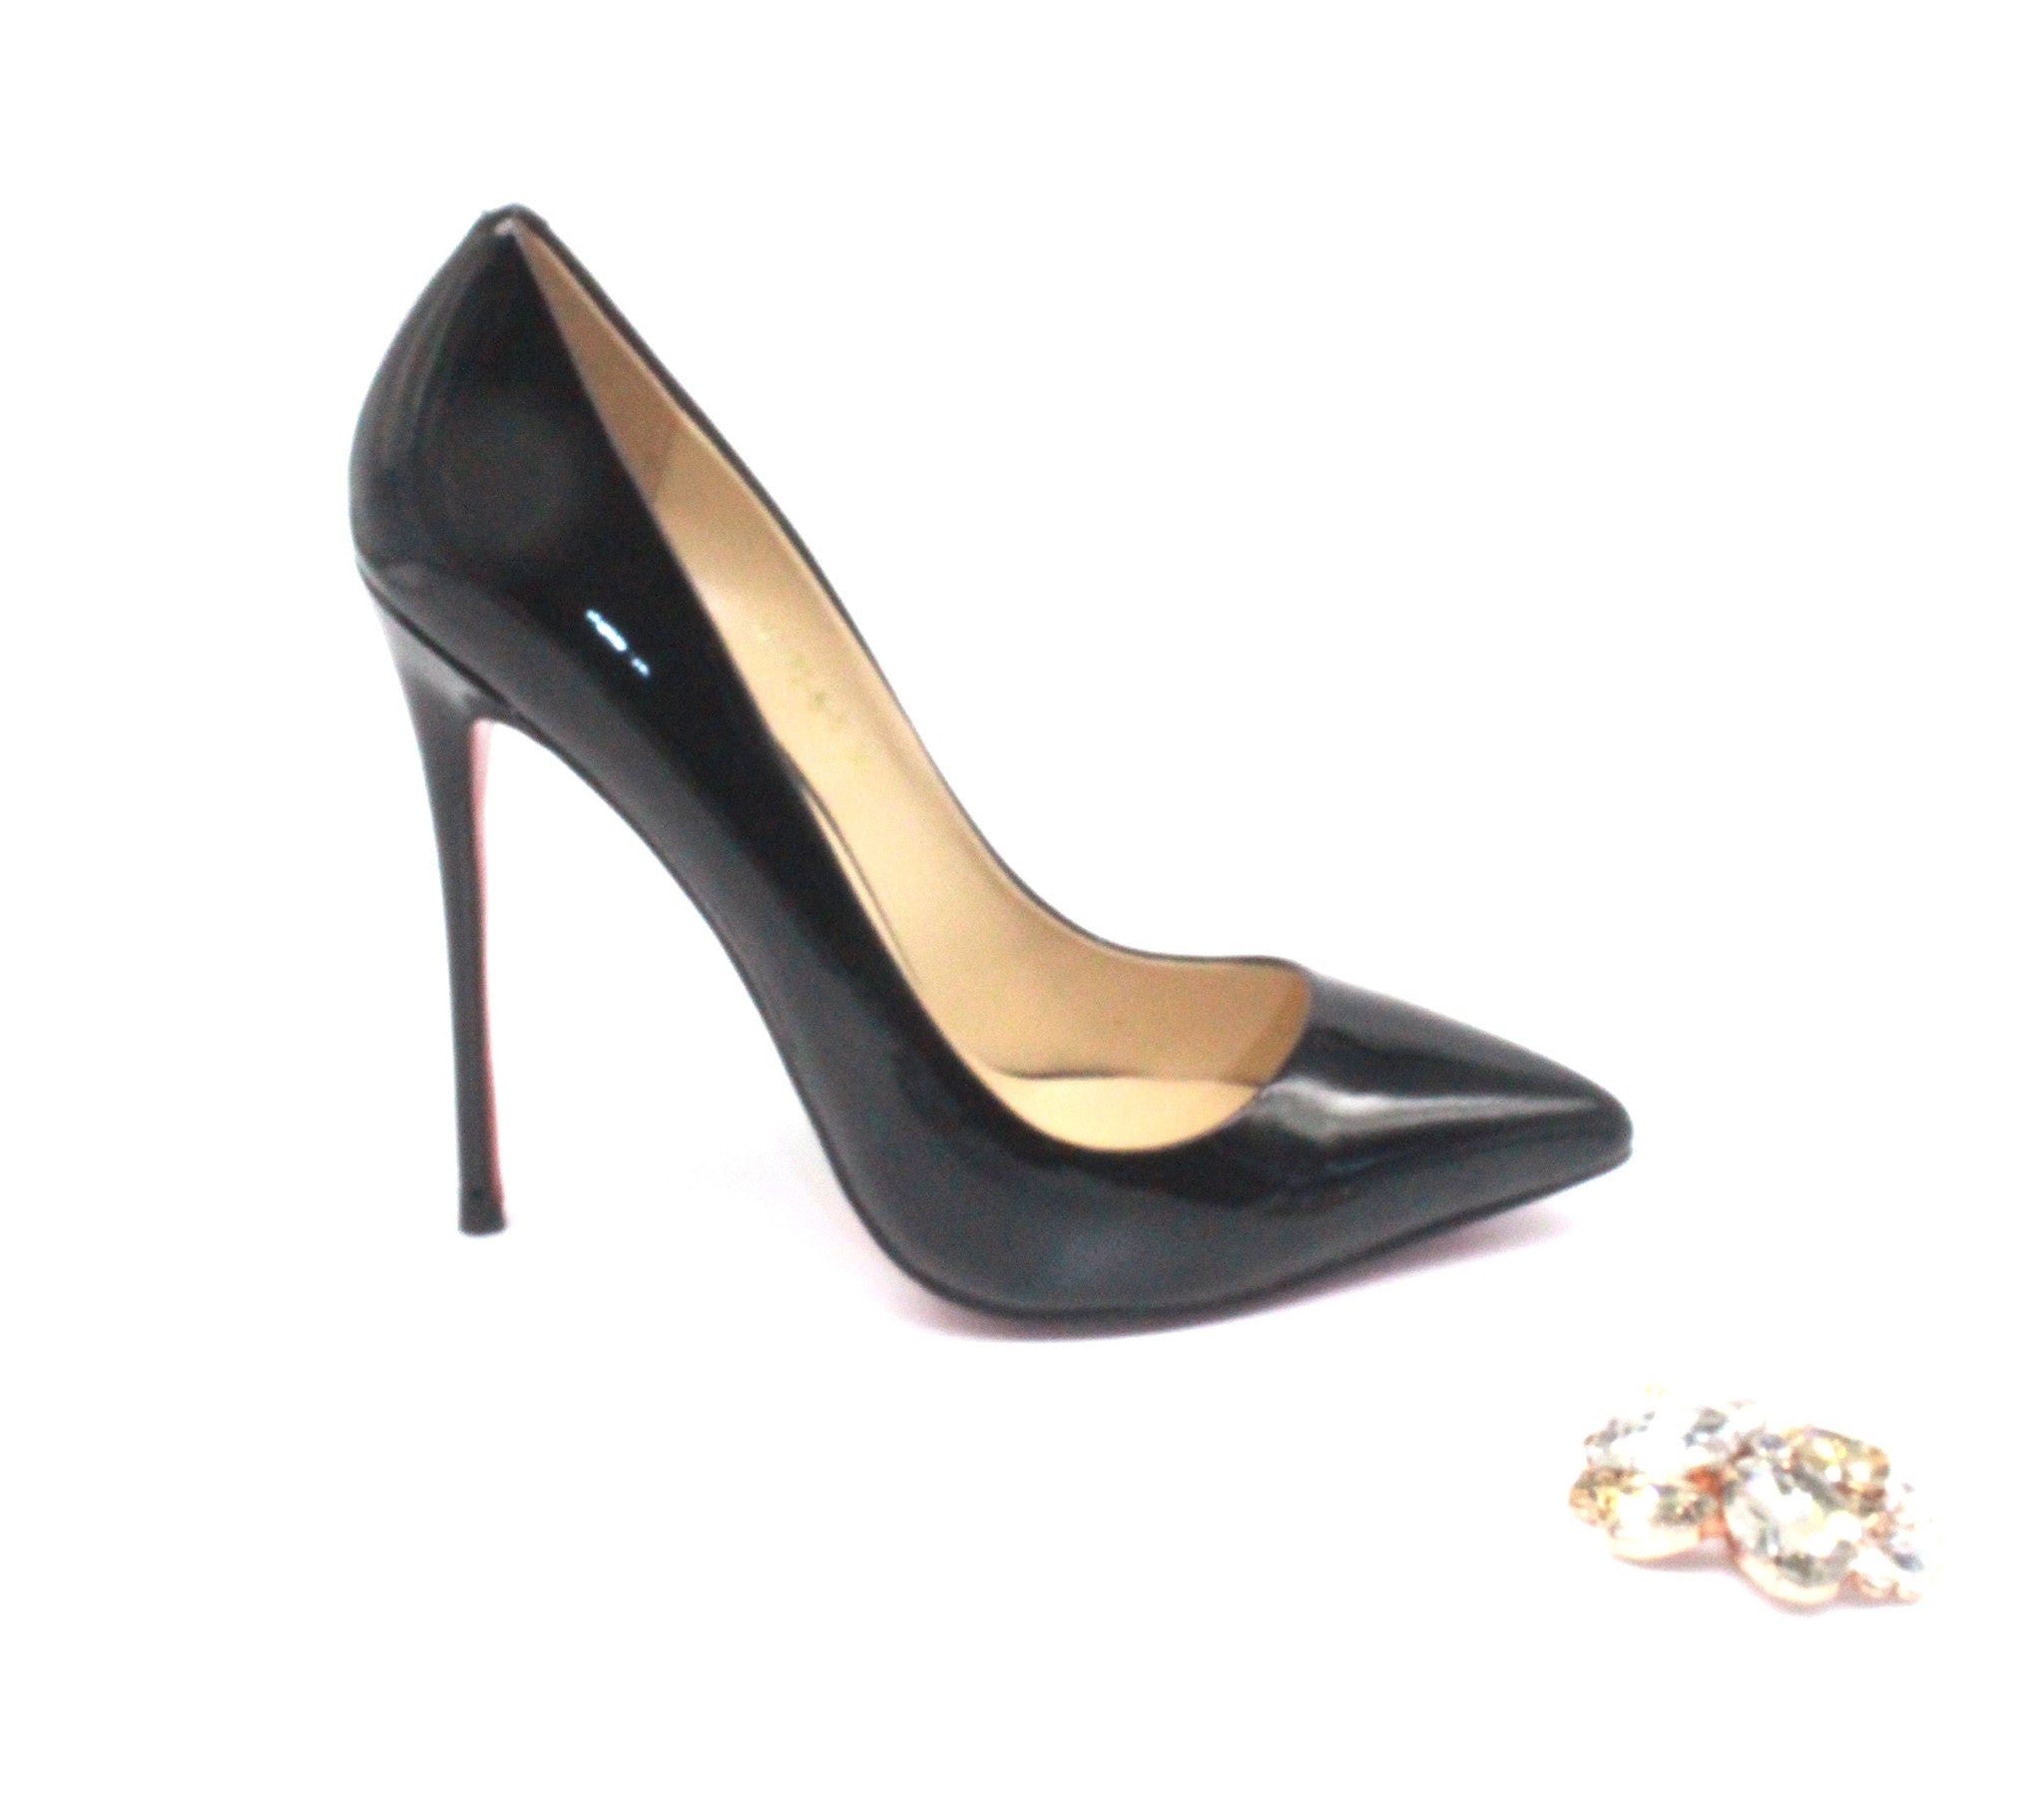 inch heels | Glossy Black Classy Heels 